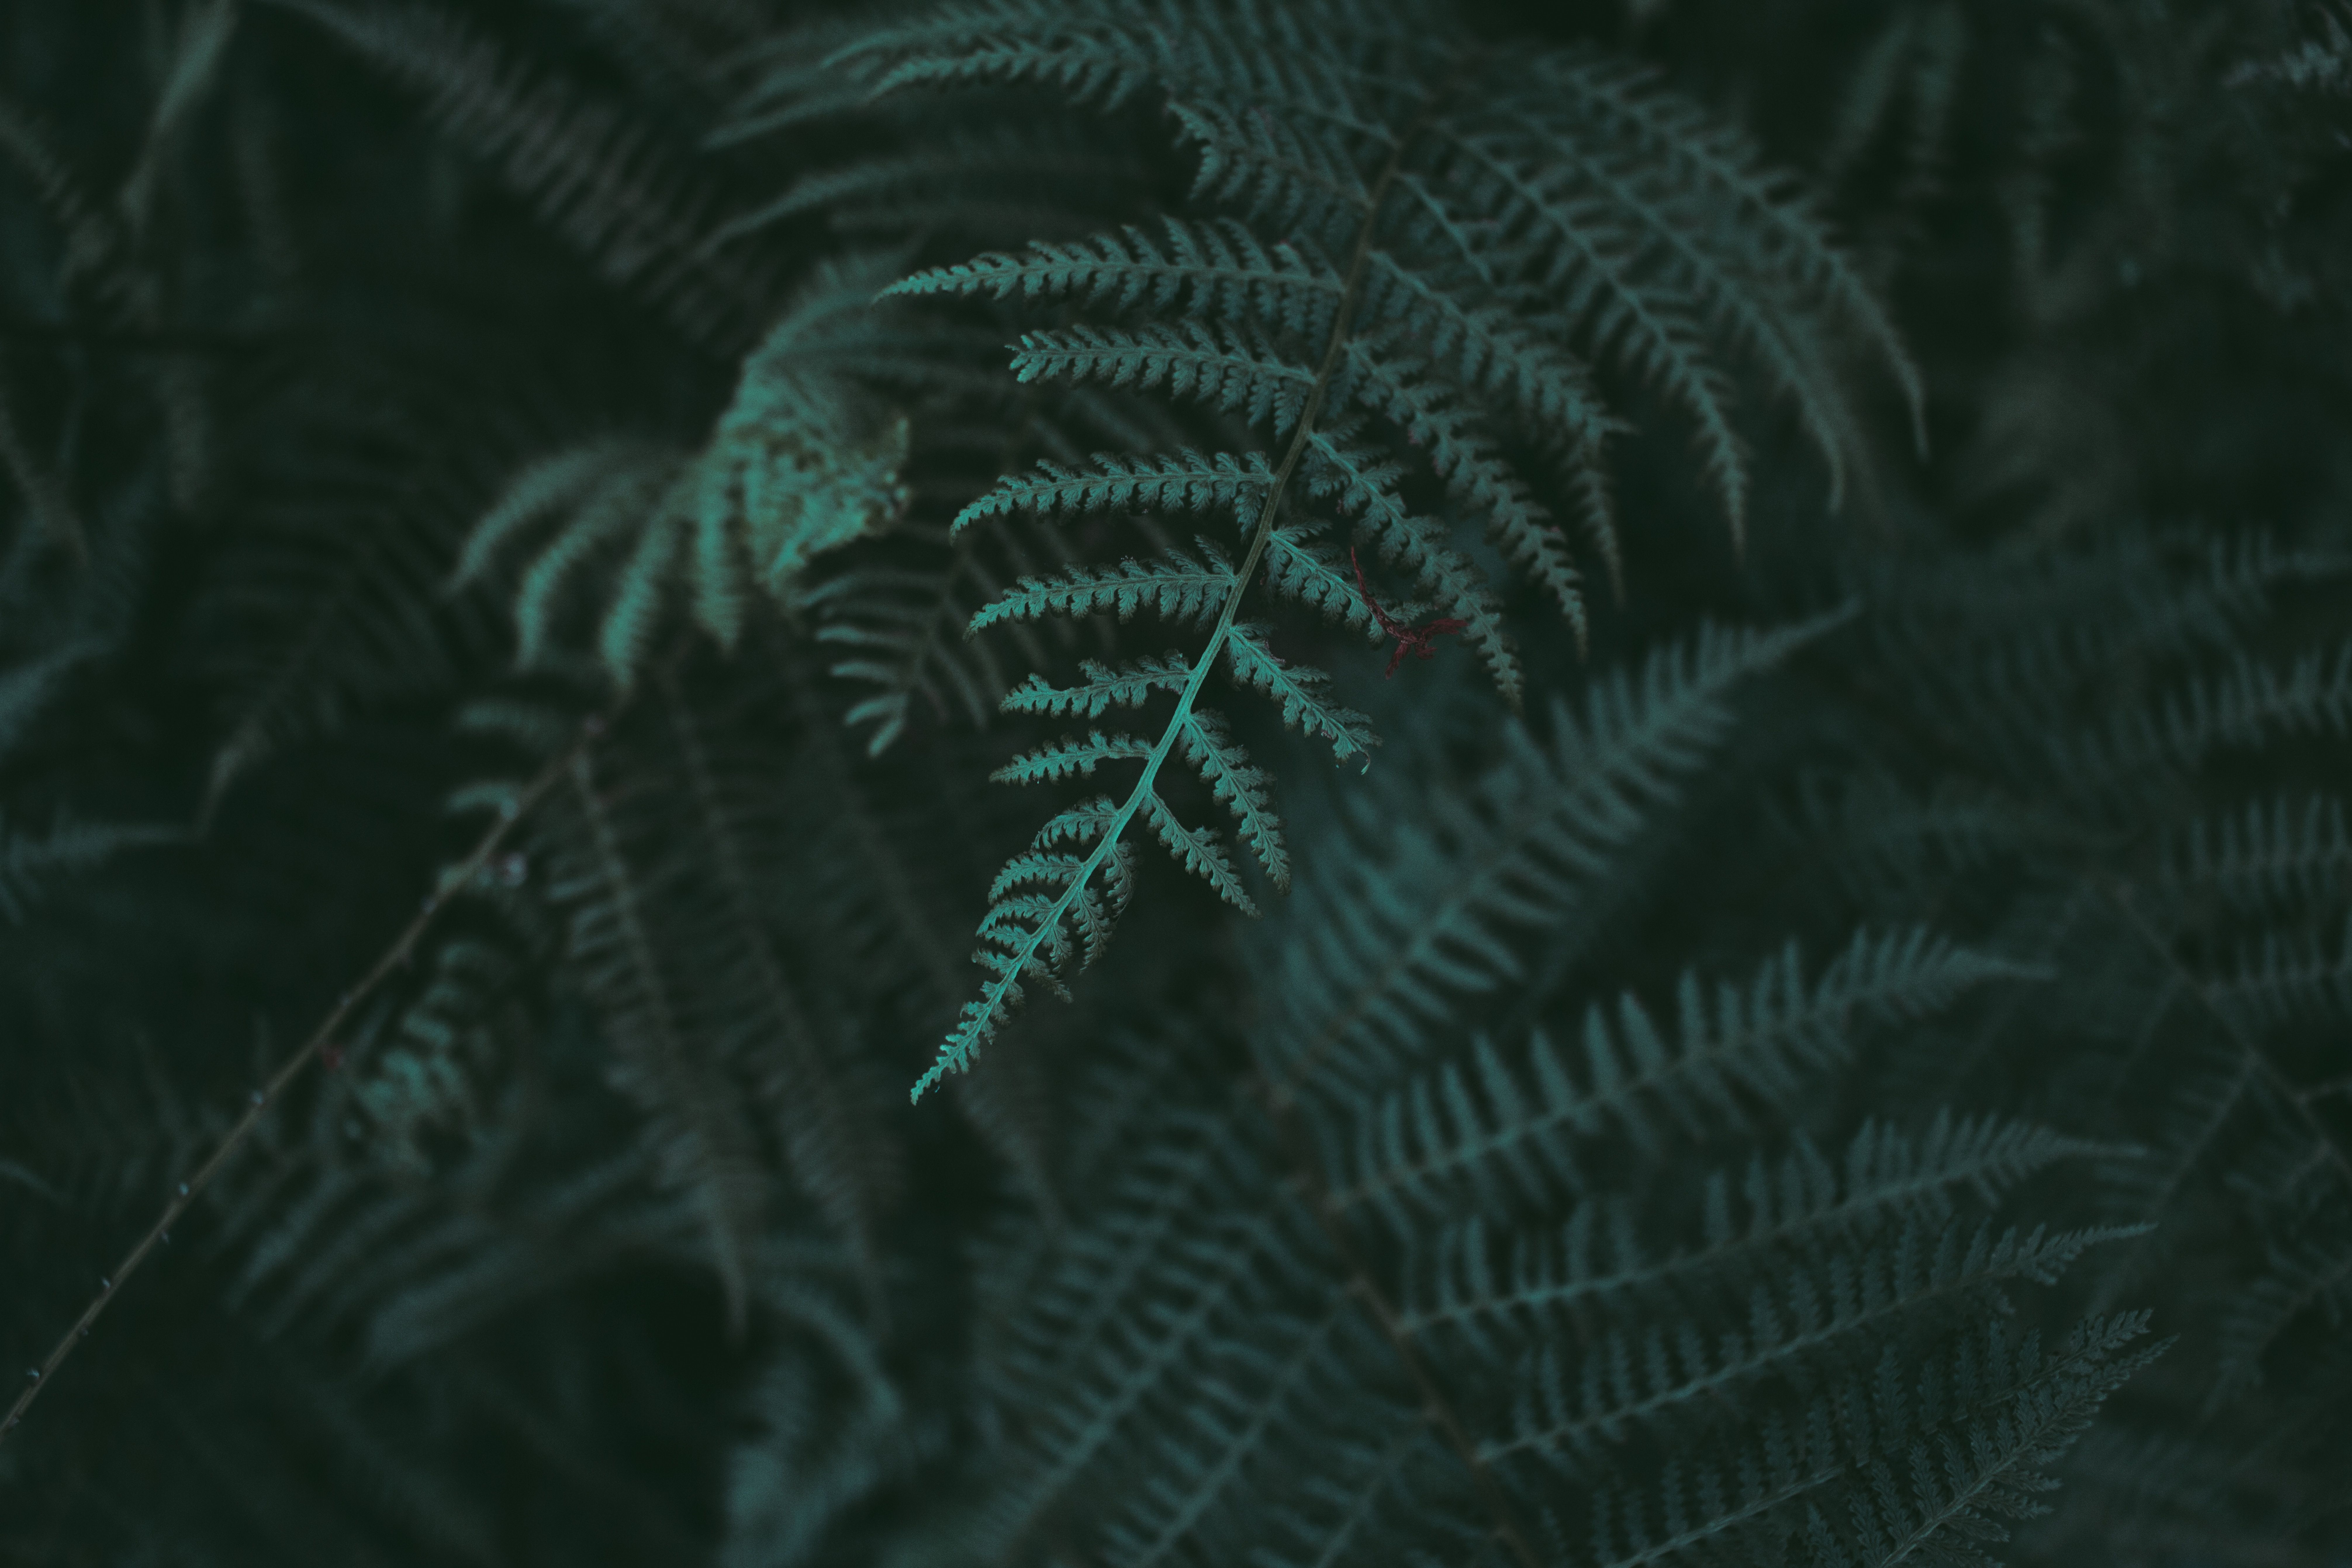 8047x5365 #wallpaper Hd, #dark, #wallpaper, #night, #dark Green, #plant, #moody, #green, #life, #fern, #tree, #flower, #closeup, #nature, #close Up, #leaf, #detail, #Public Domain Image, #leaves. Mocah.org HD Desktop Wallpaper